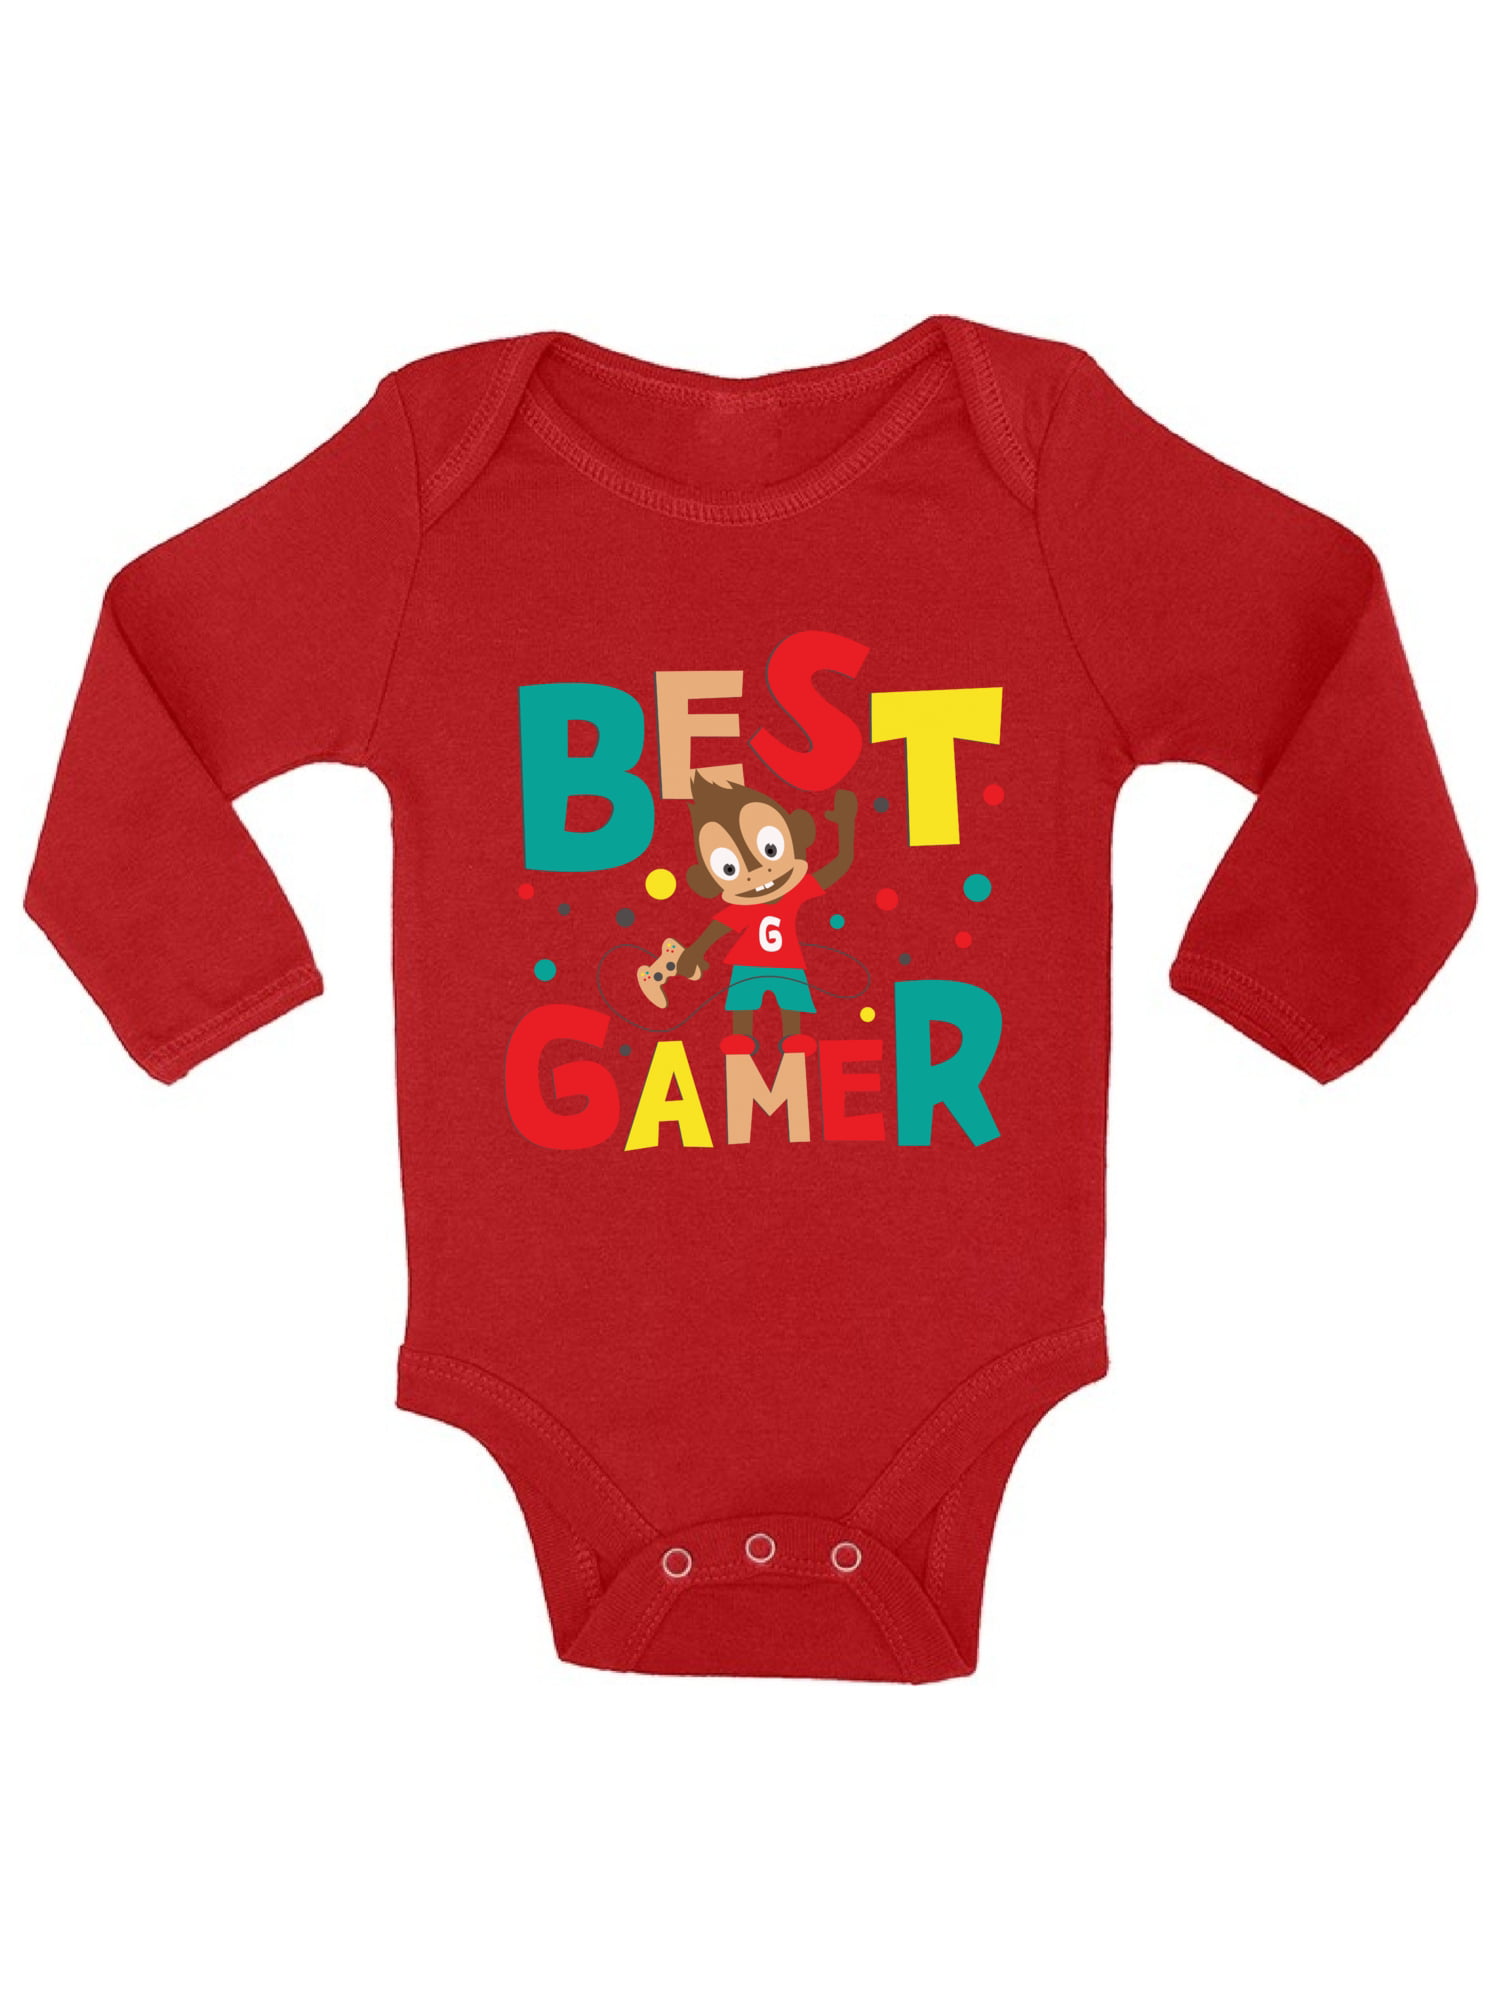 Super Mario Onesie Bodysuit Sizes Shirt Baby Shower Gift Kids Video Game Retro 